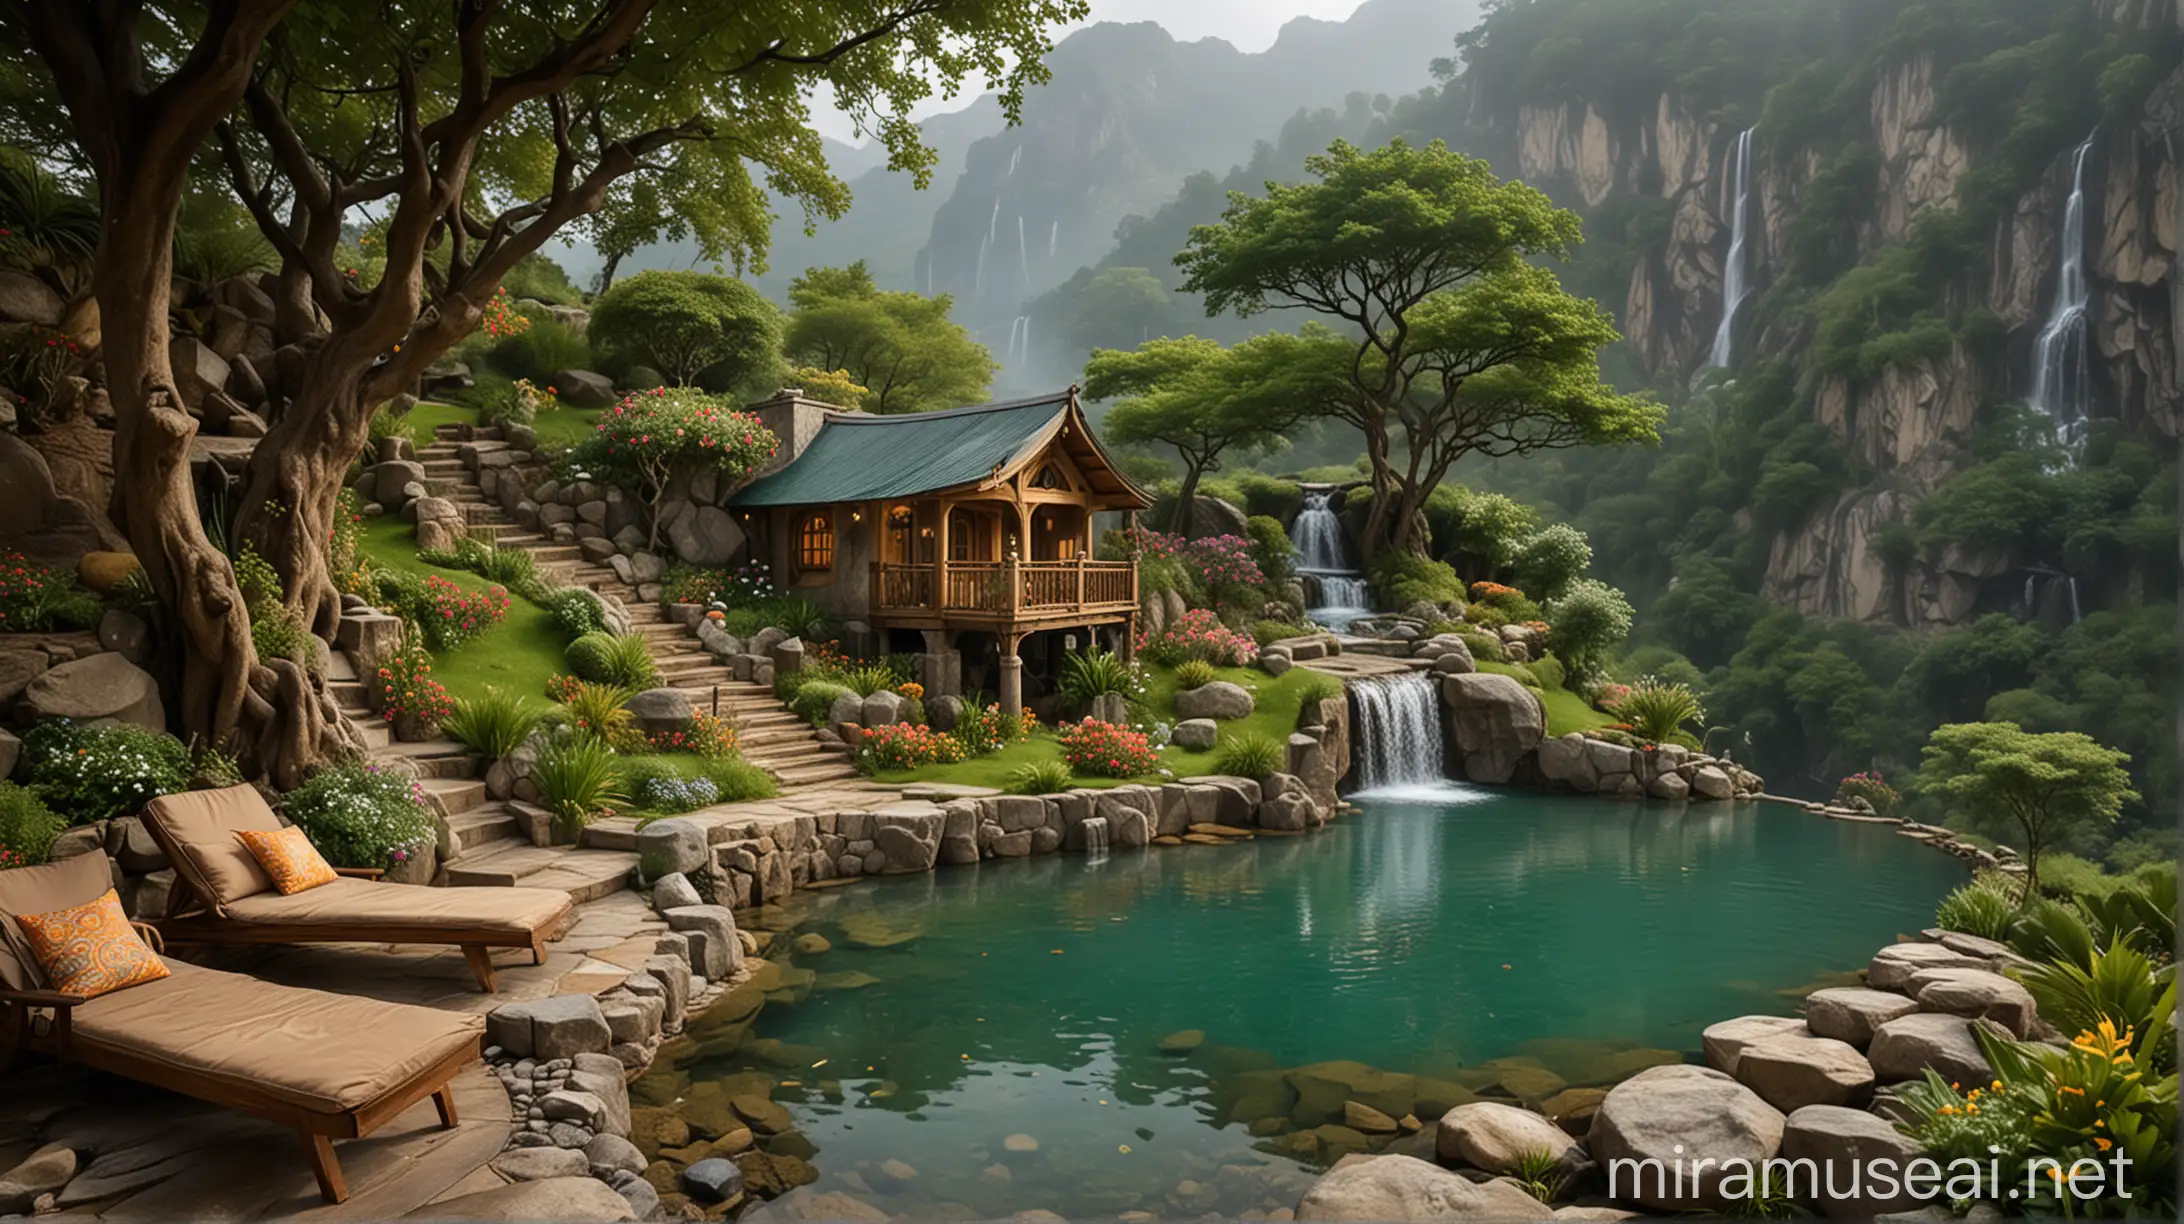 Majestic Waterfall Mountain Hut Interior Serene Monsoon Emerald Dreamscape